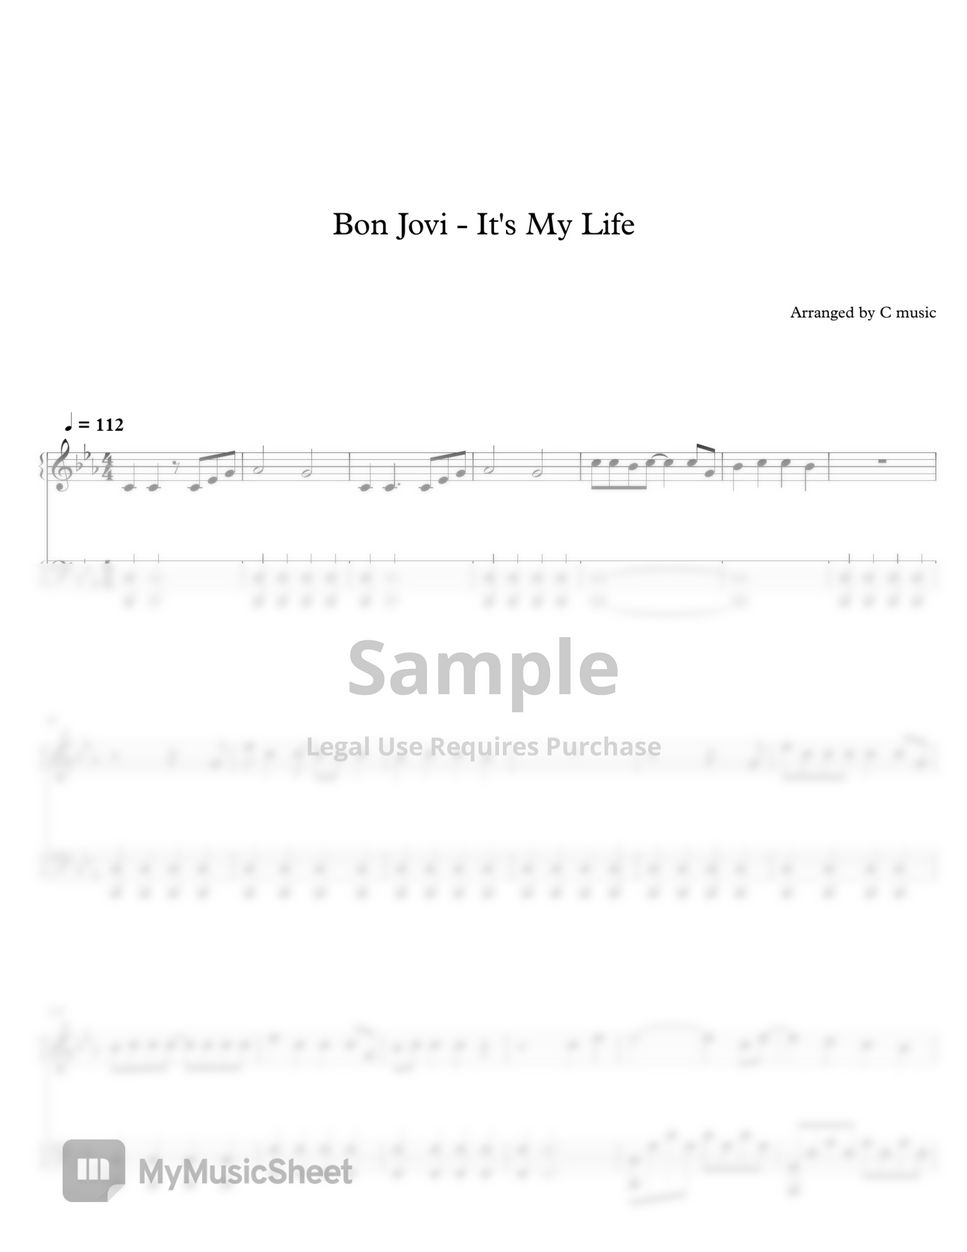 Bon Jovi - It's My Life by C Music